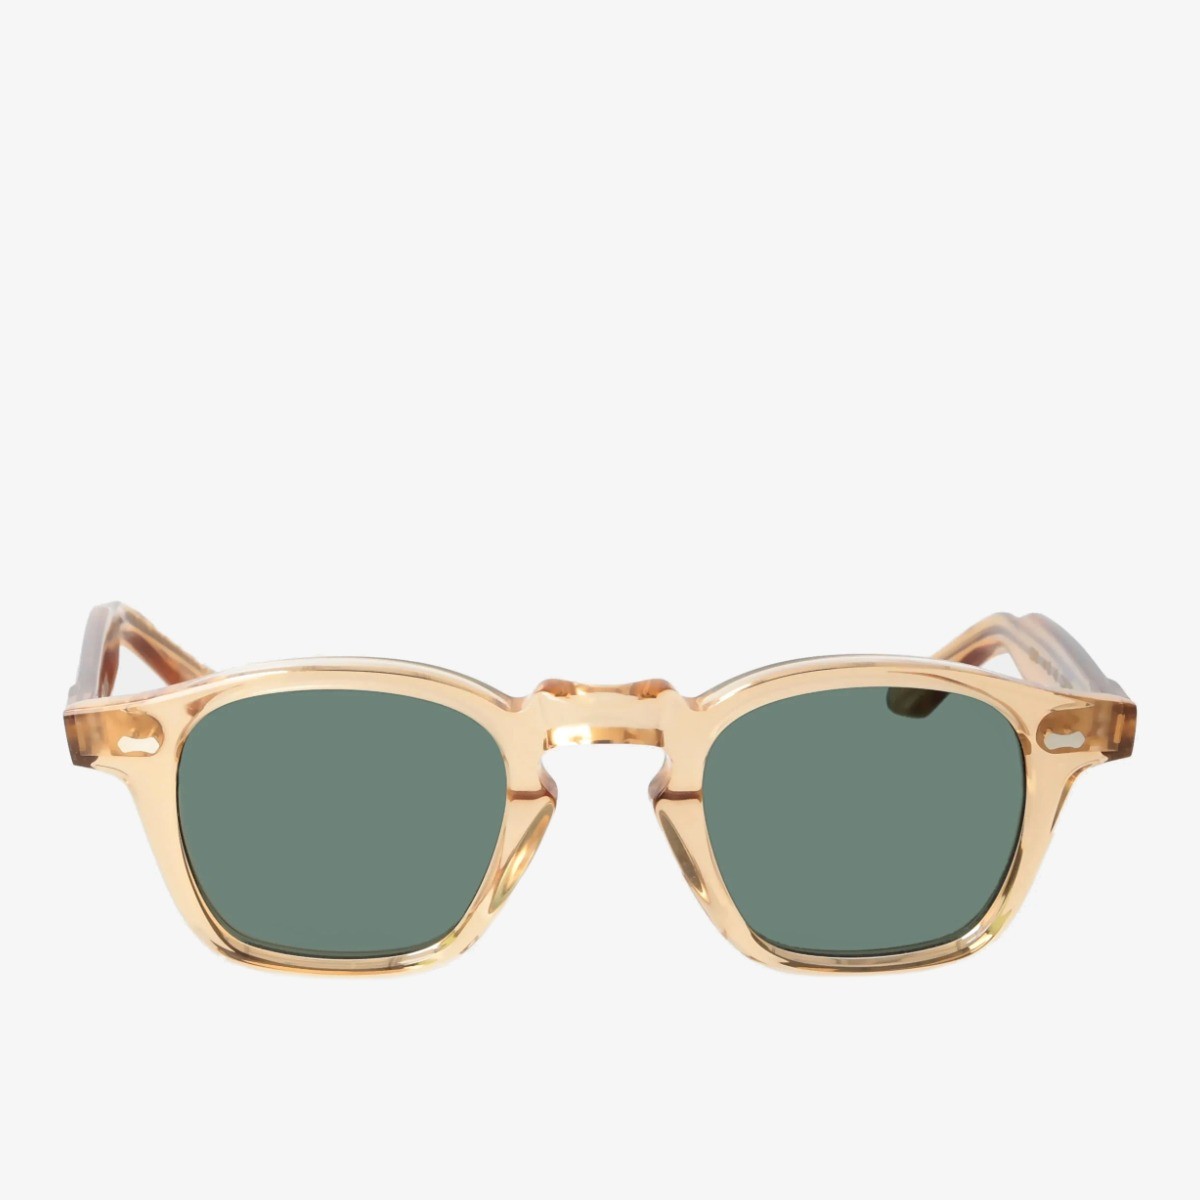 TBD Eyewear Cord light brown frame green lenses sunglasses